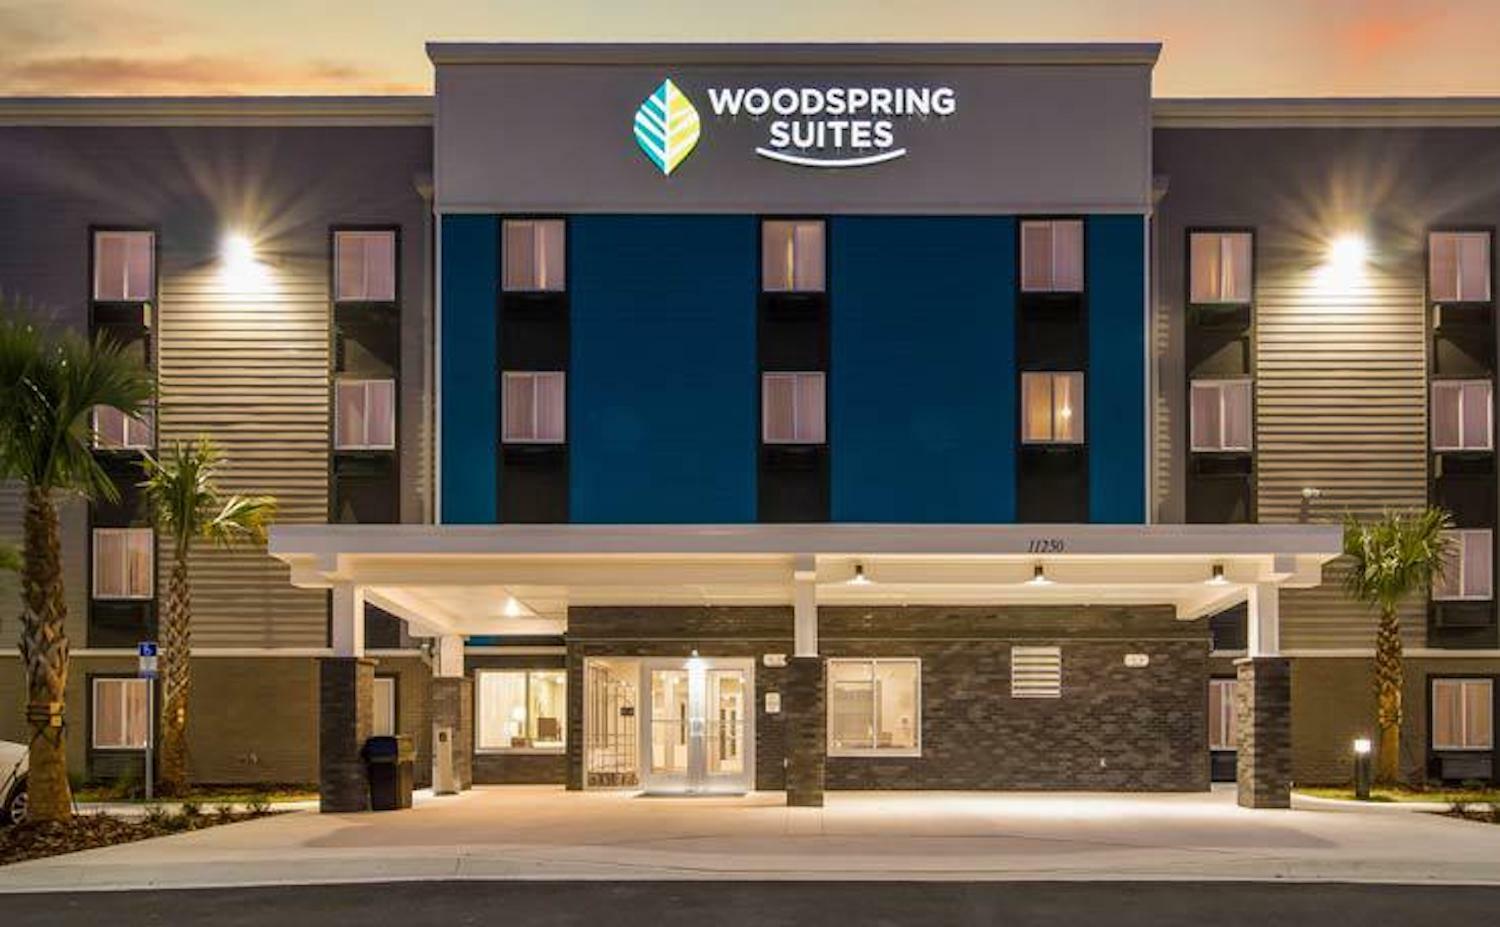 Photo of WoodSpring Suites Jacksonville Campfield, Jacksonville, FL